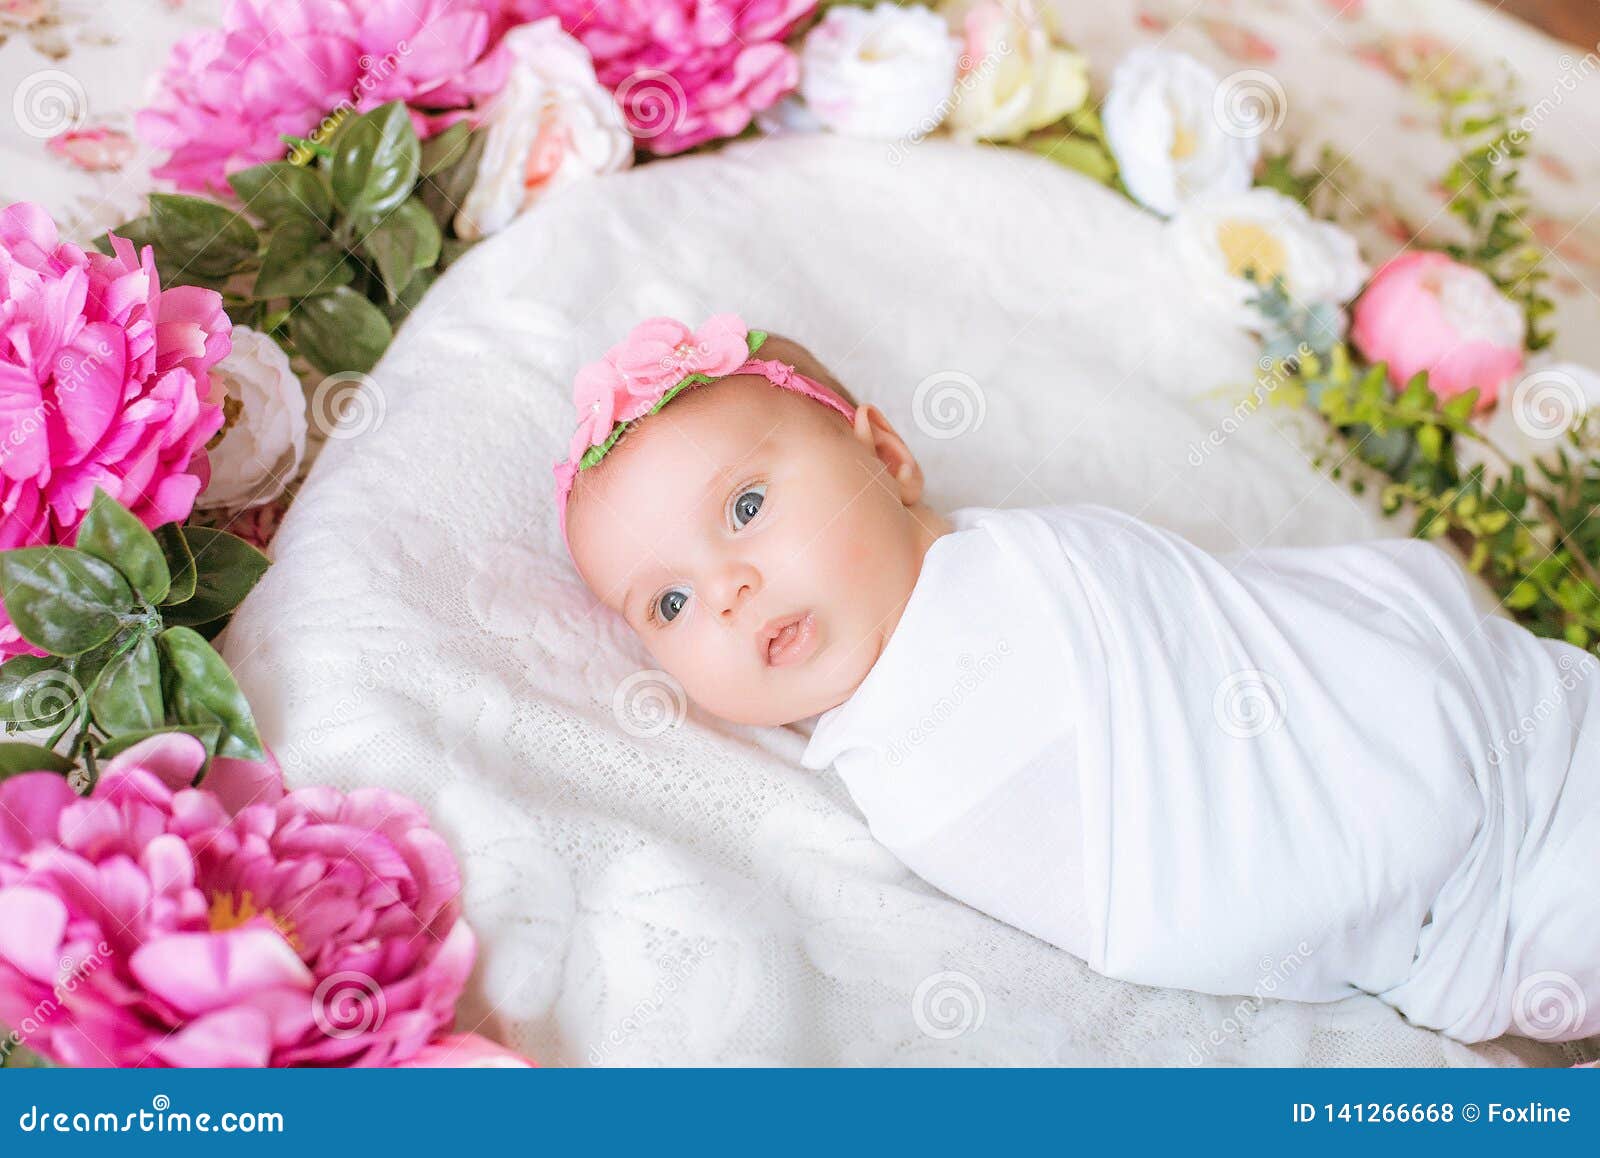 baby in a flower